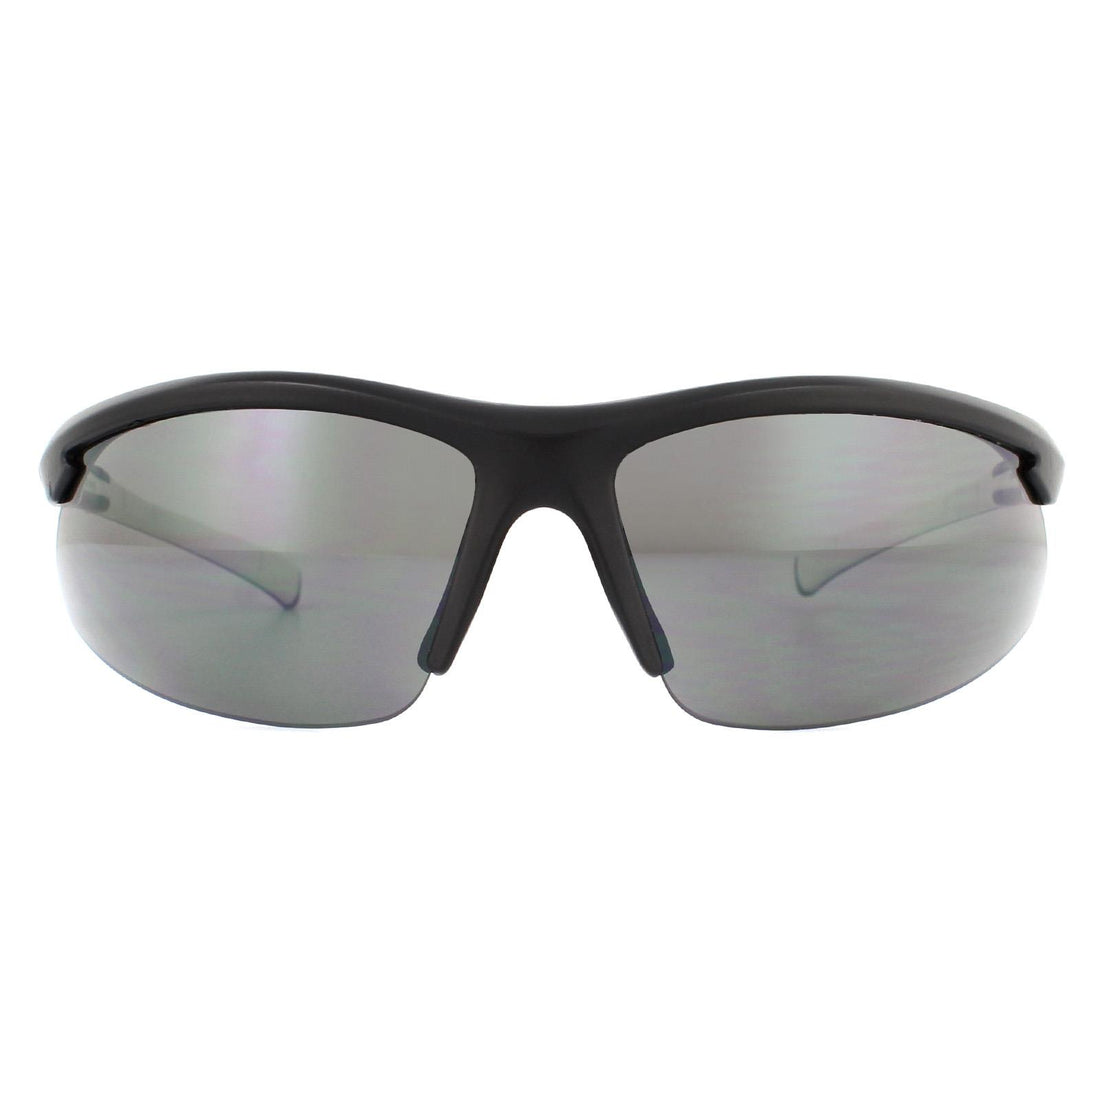 Eyelevel Sunglasses Fairway Black and Grey Grey